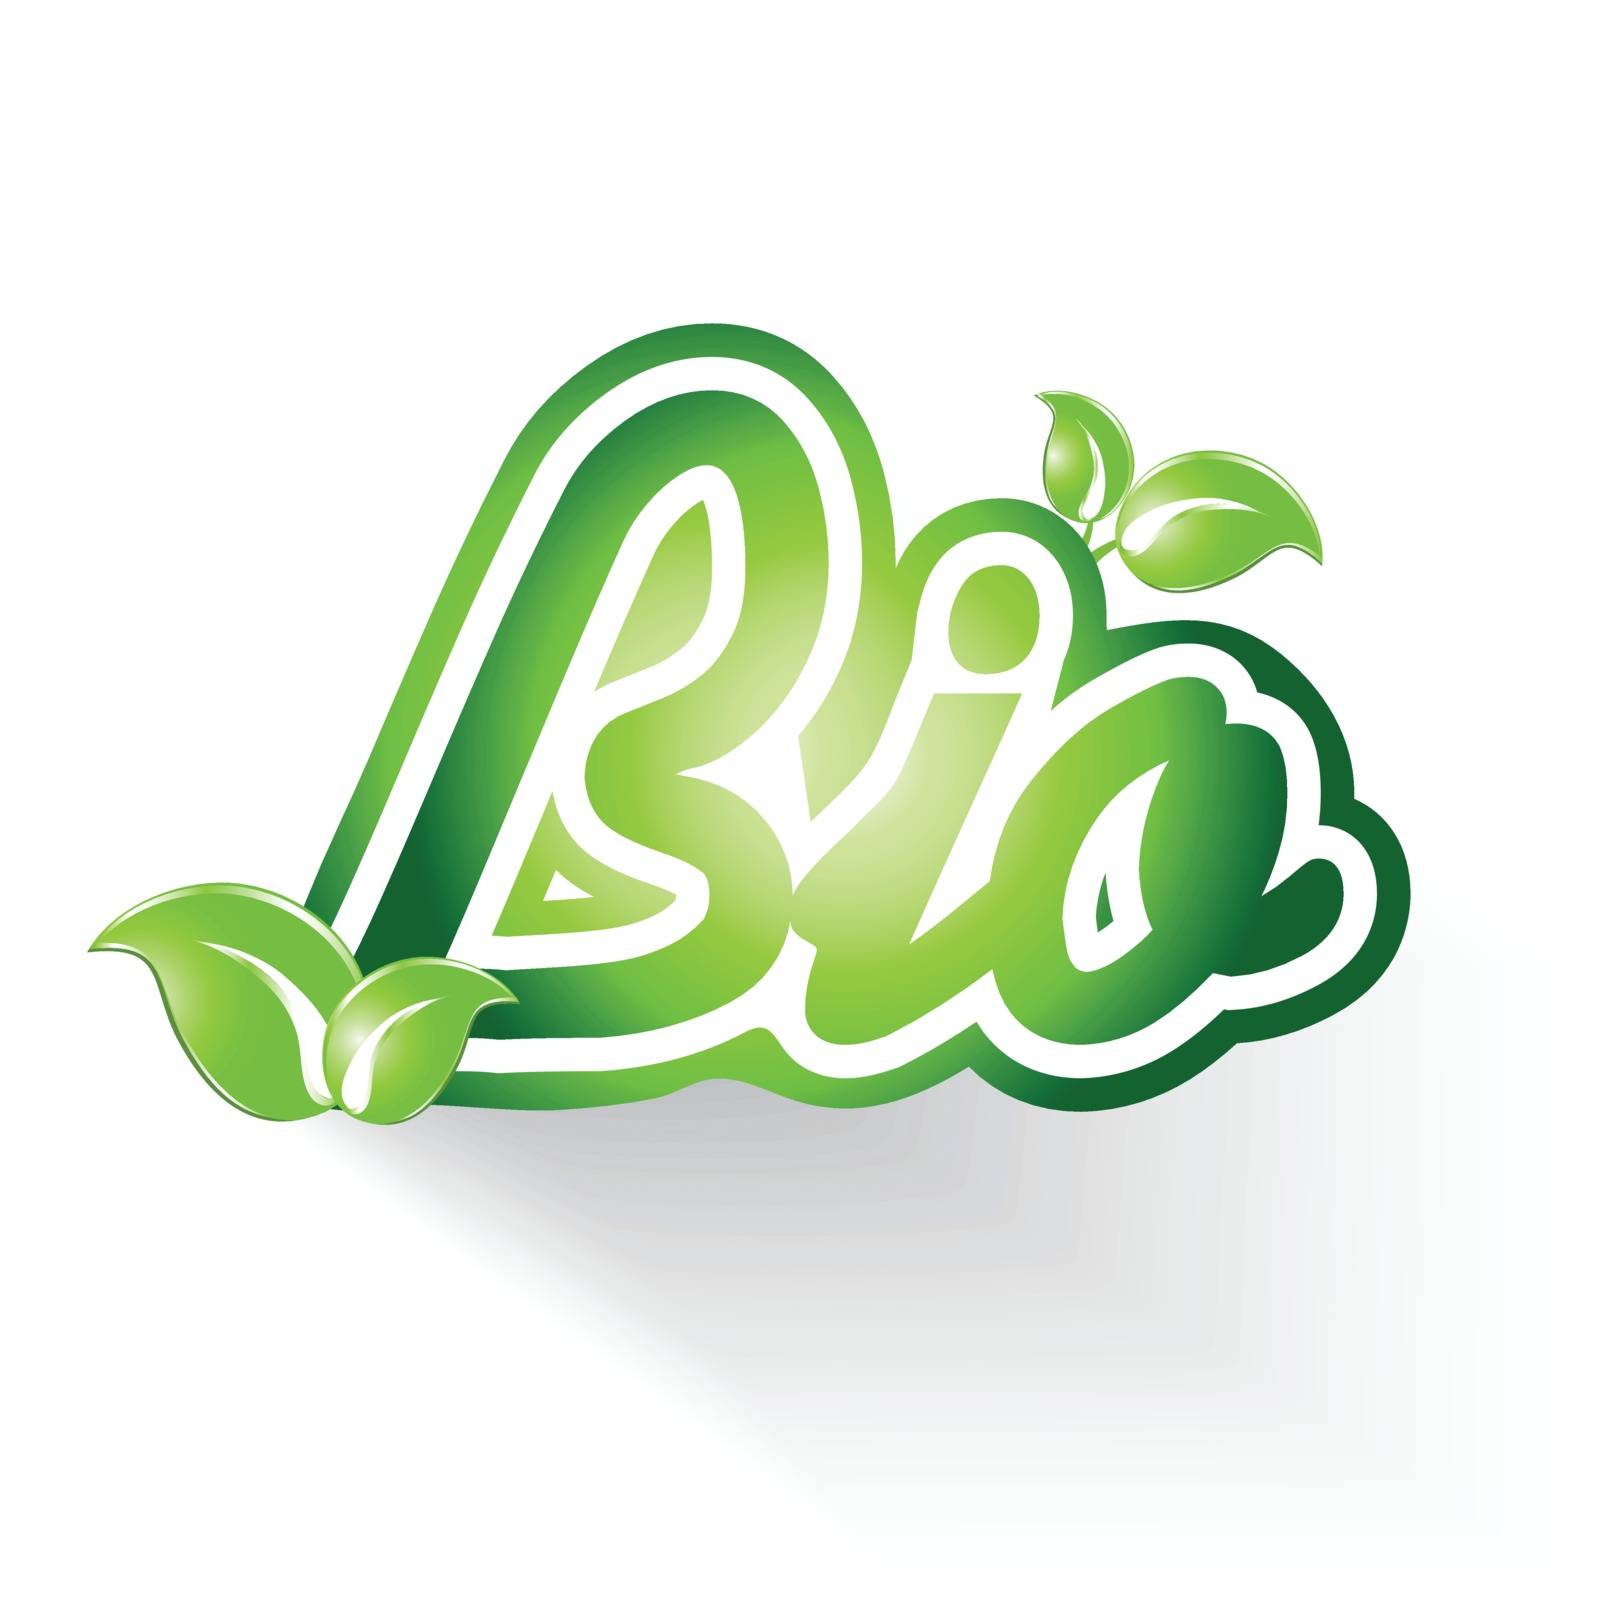 Bio. Vector ecological symbol for you design.